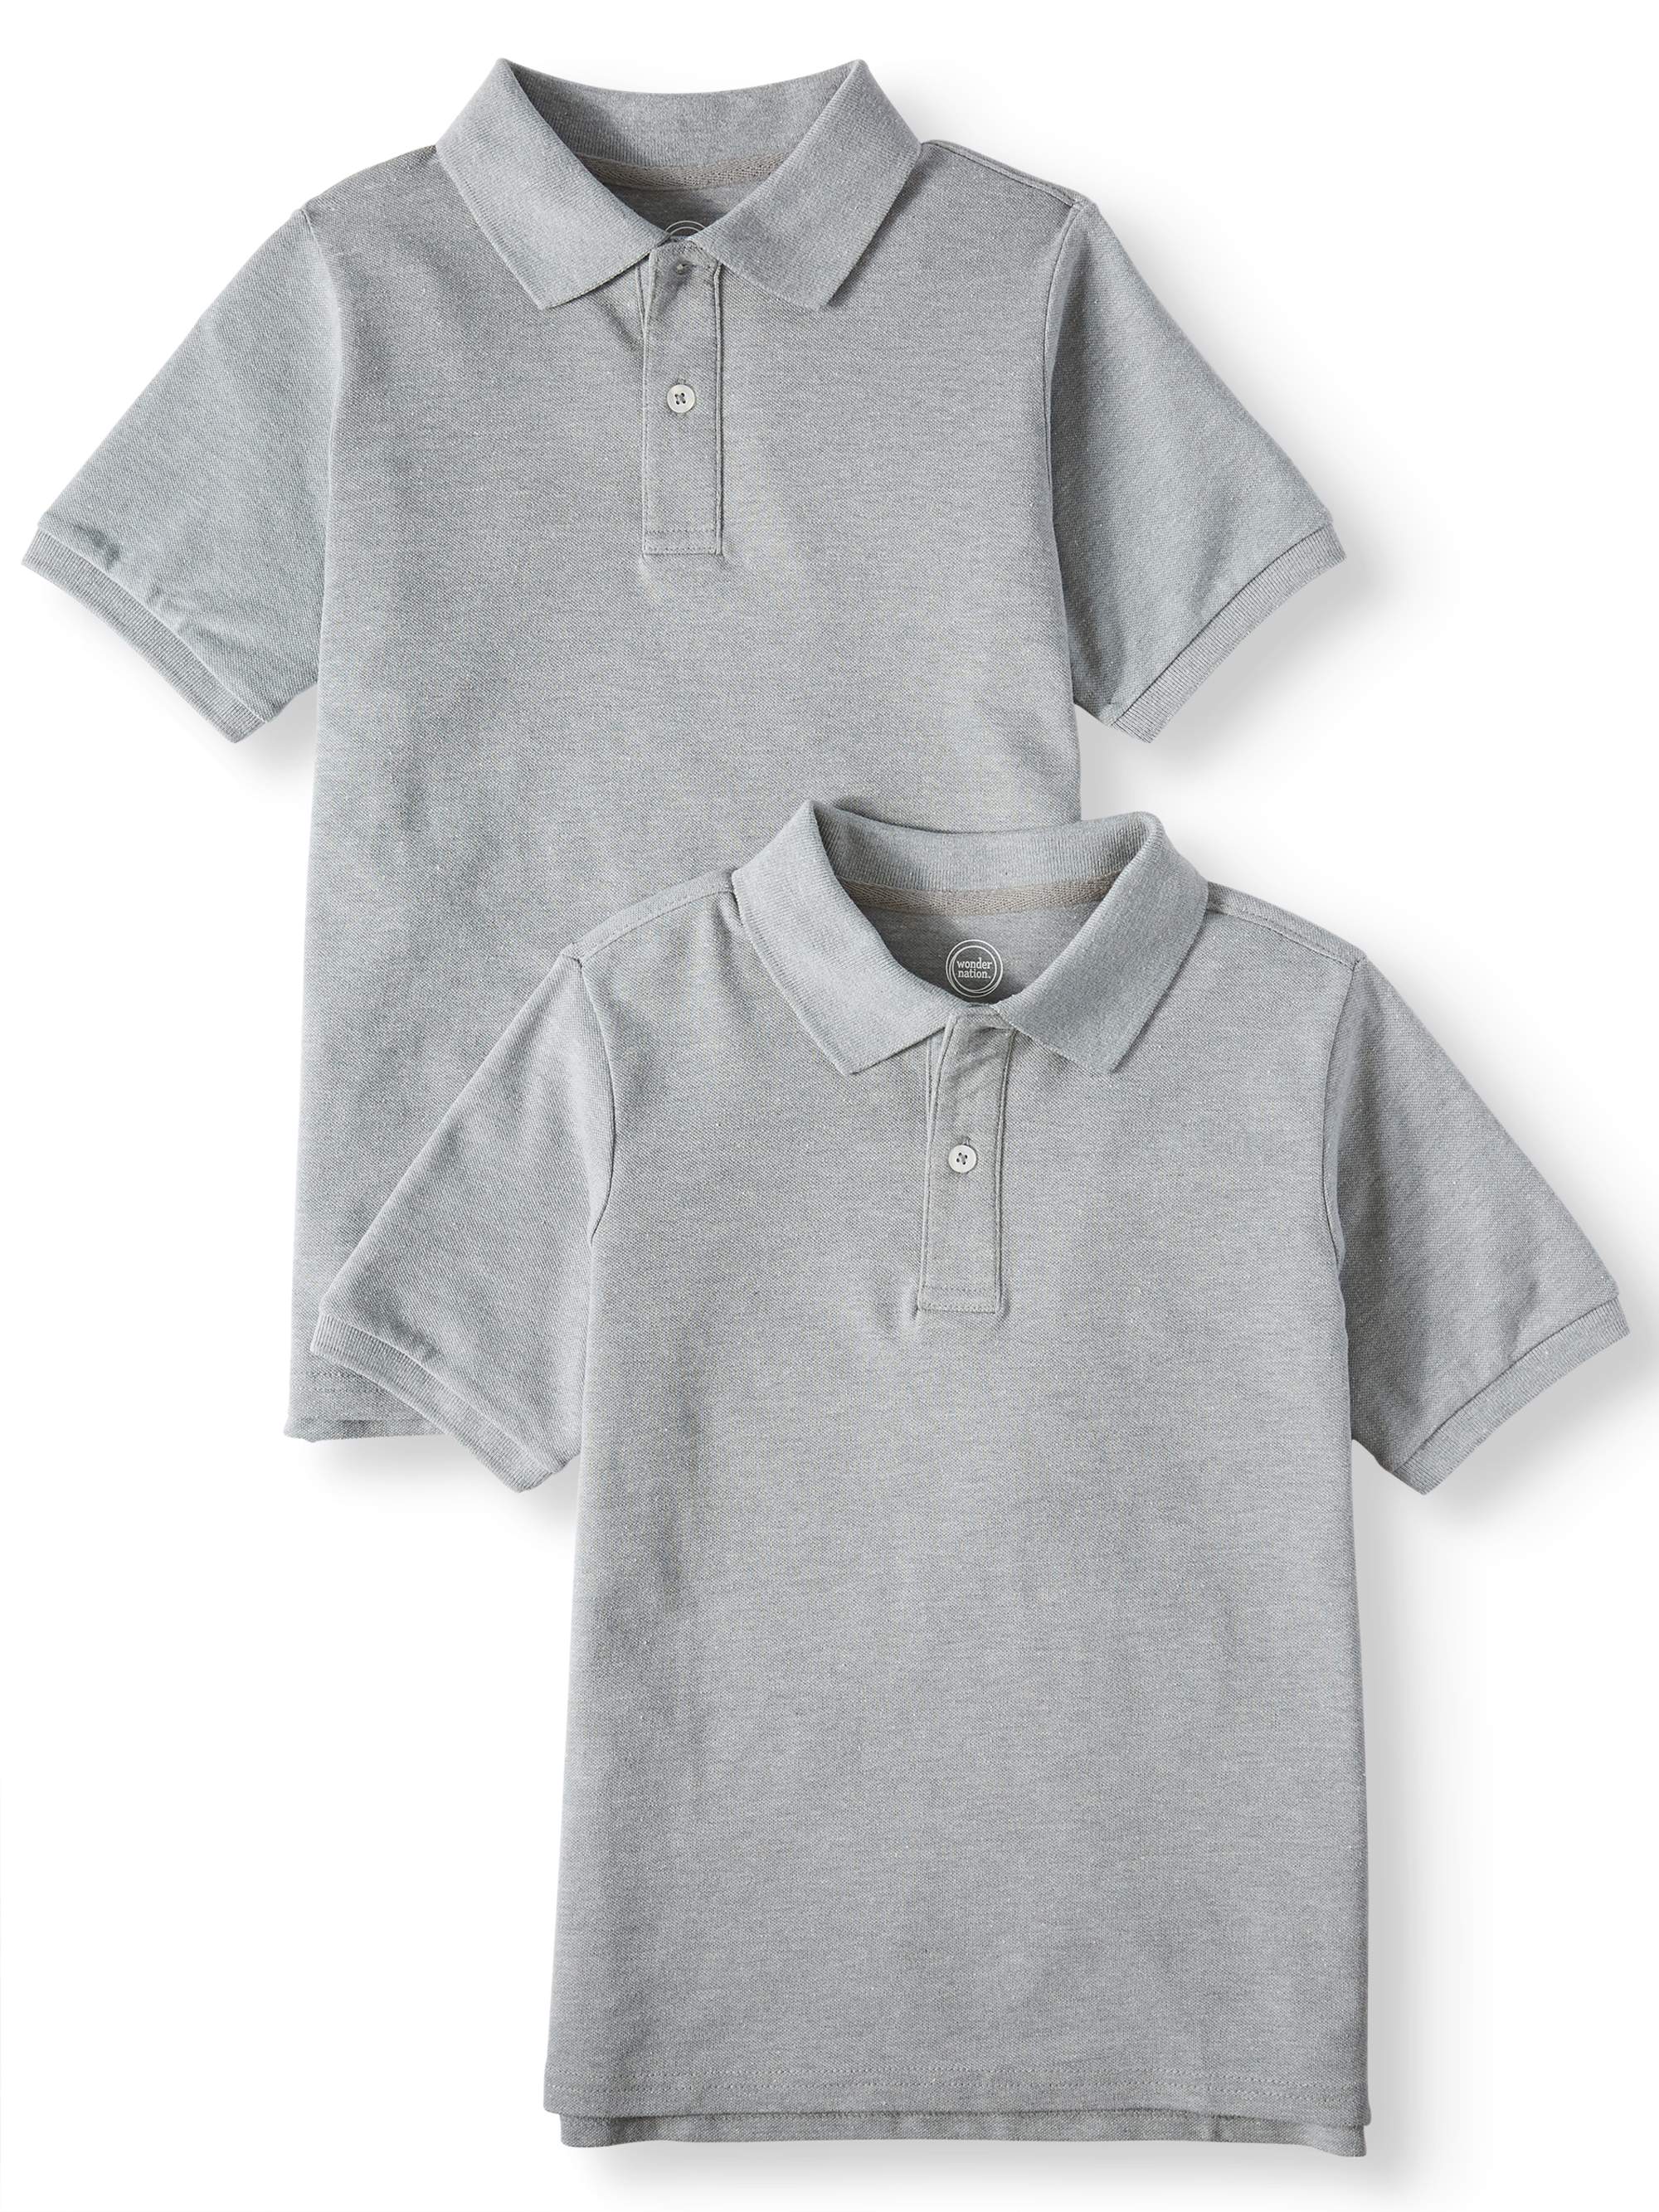 Wonder Nation Boys School Uniform Short Sleeve Pique Polo Shirts, 2-Pack Value Bundle, Sizes 4-18 & Husky - image 1 of 3